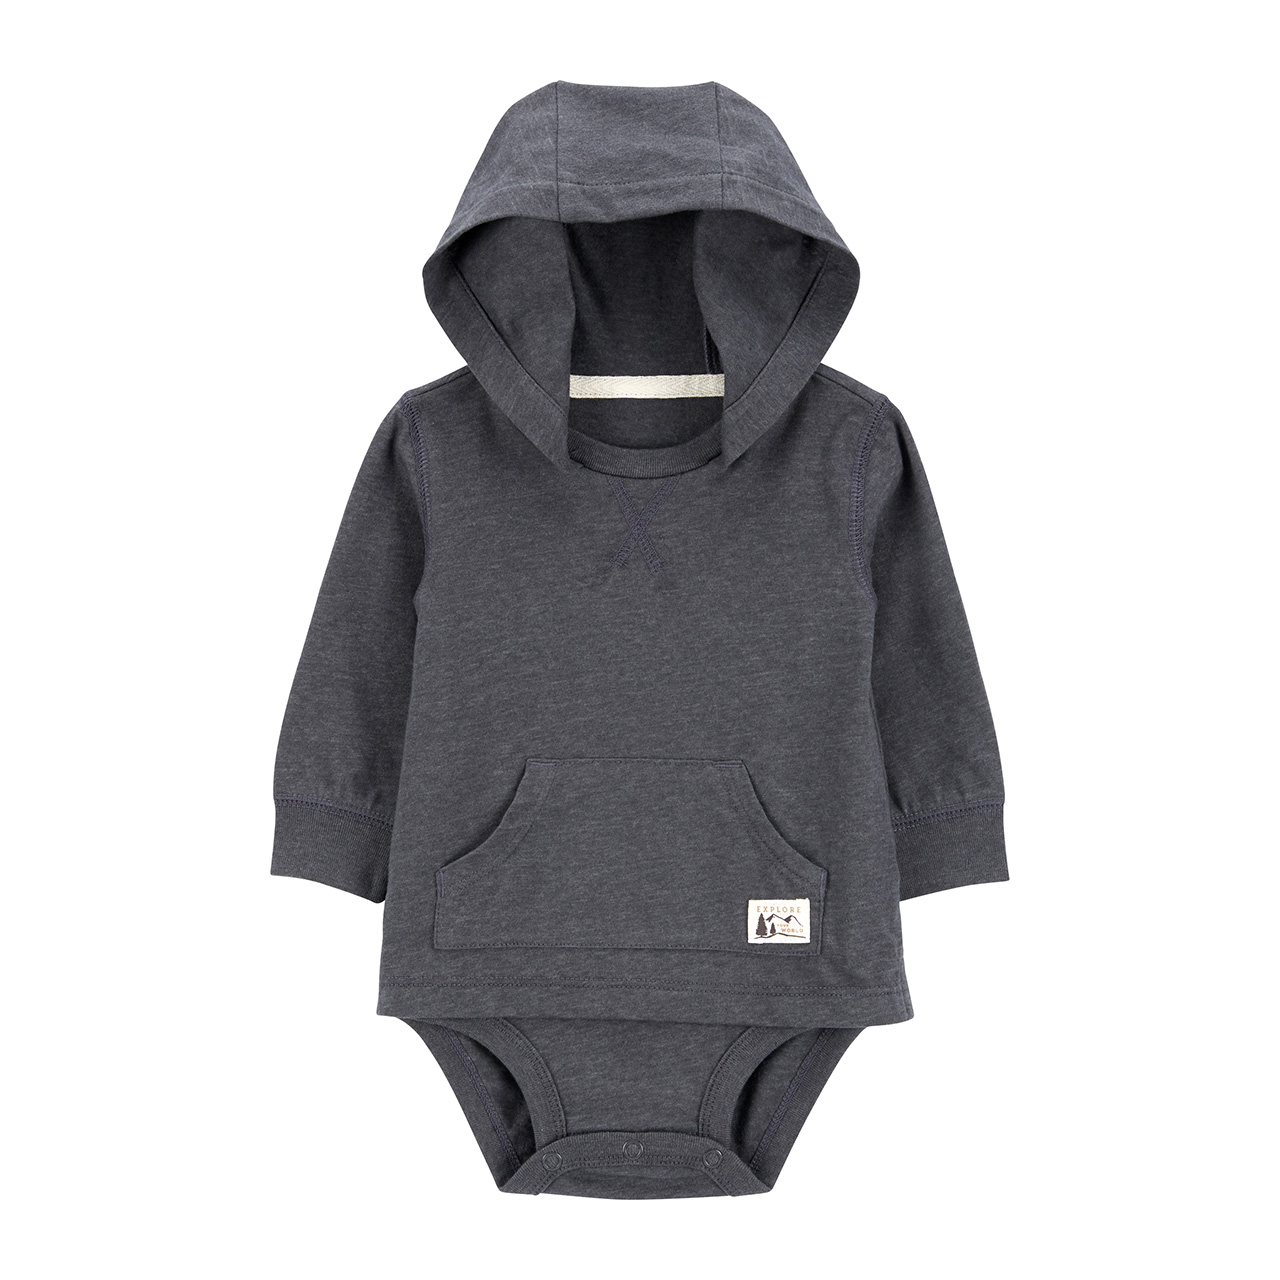 A dark grey bodysuit for babies.